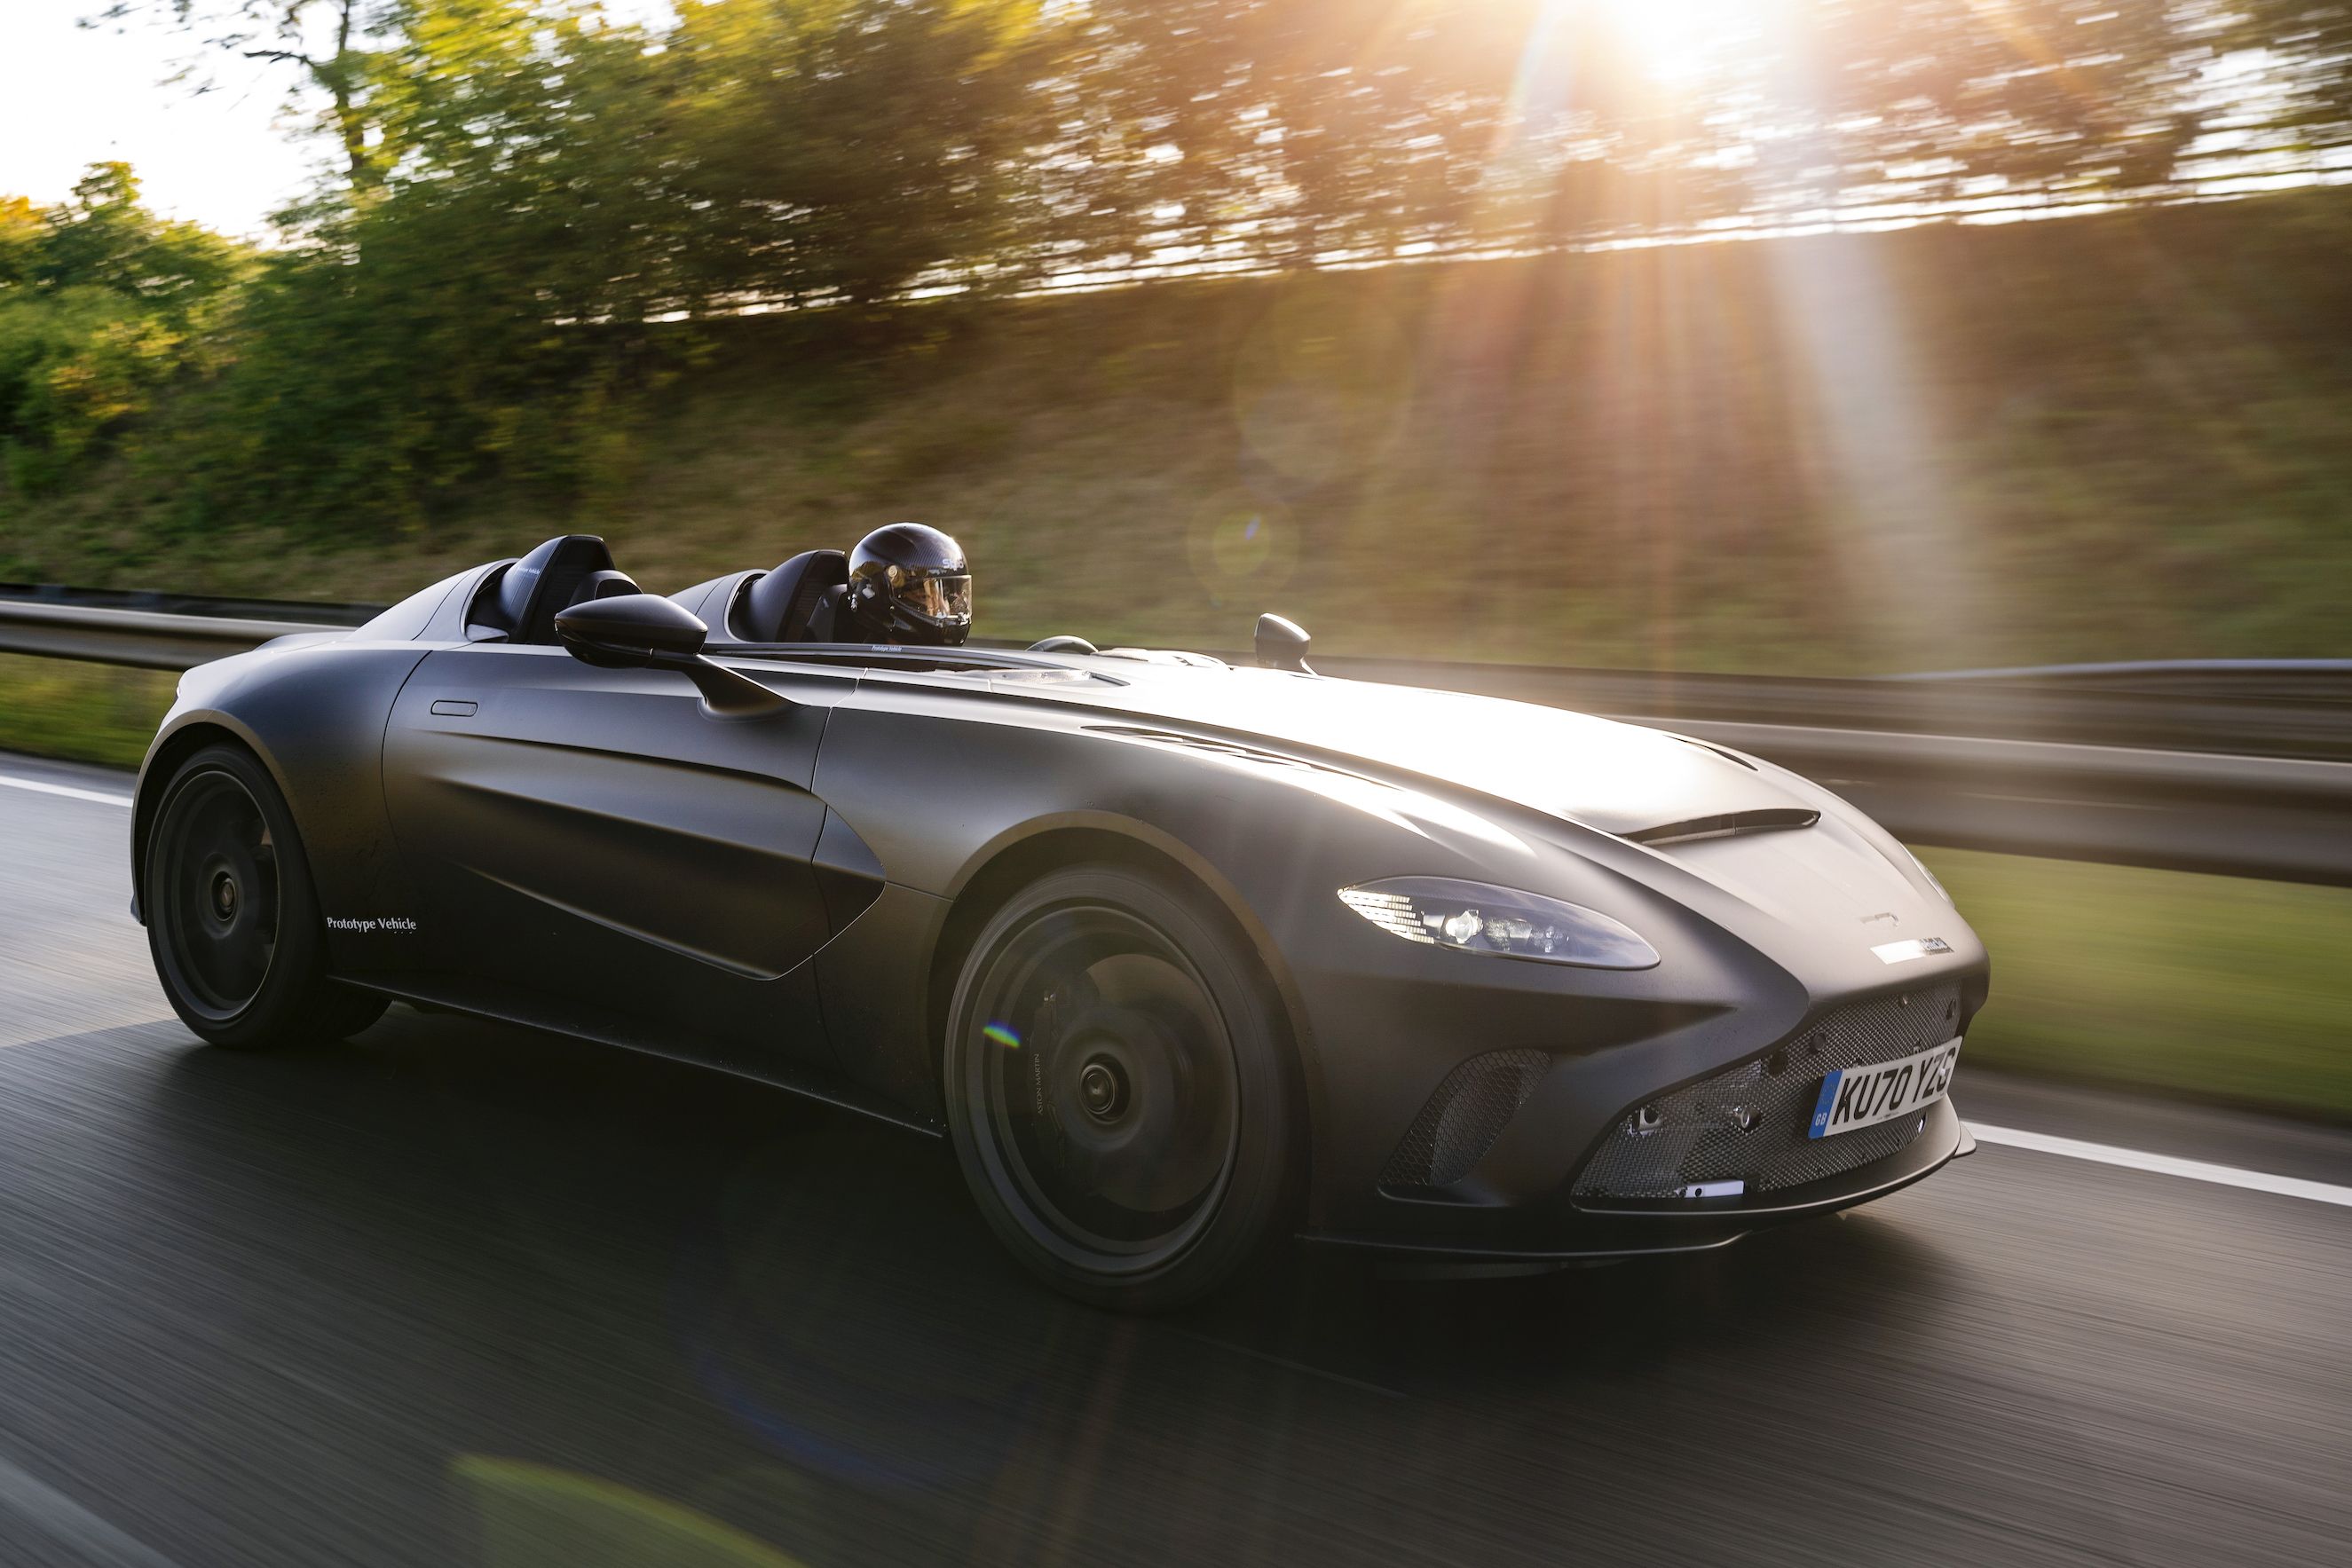 Aston Martin Reveals Photo of V12 Speedster Prototype on the Road